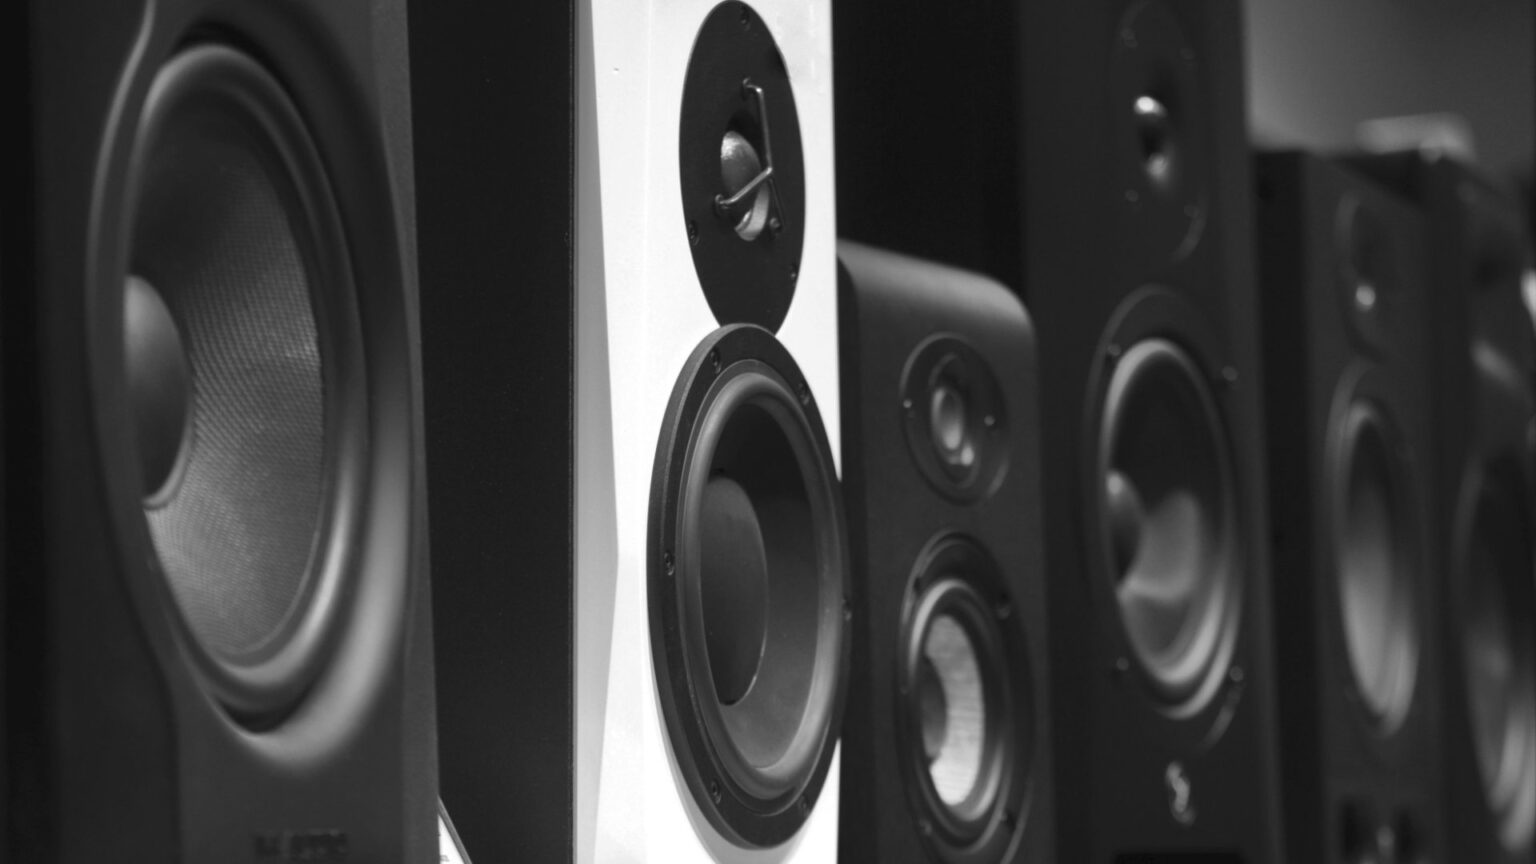 4 best studio monitors for music production and sound design - decibel peak